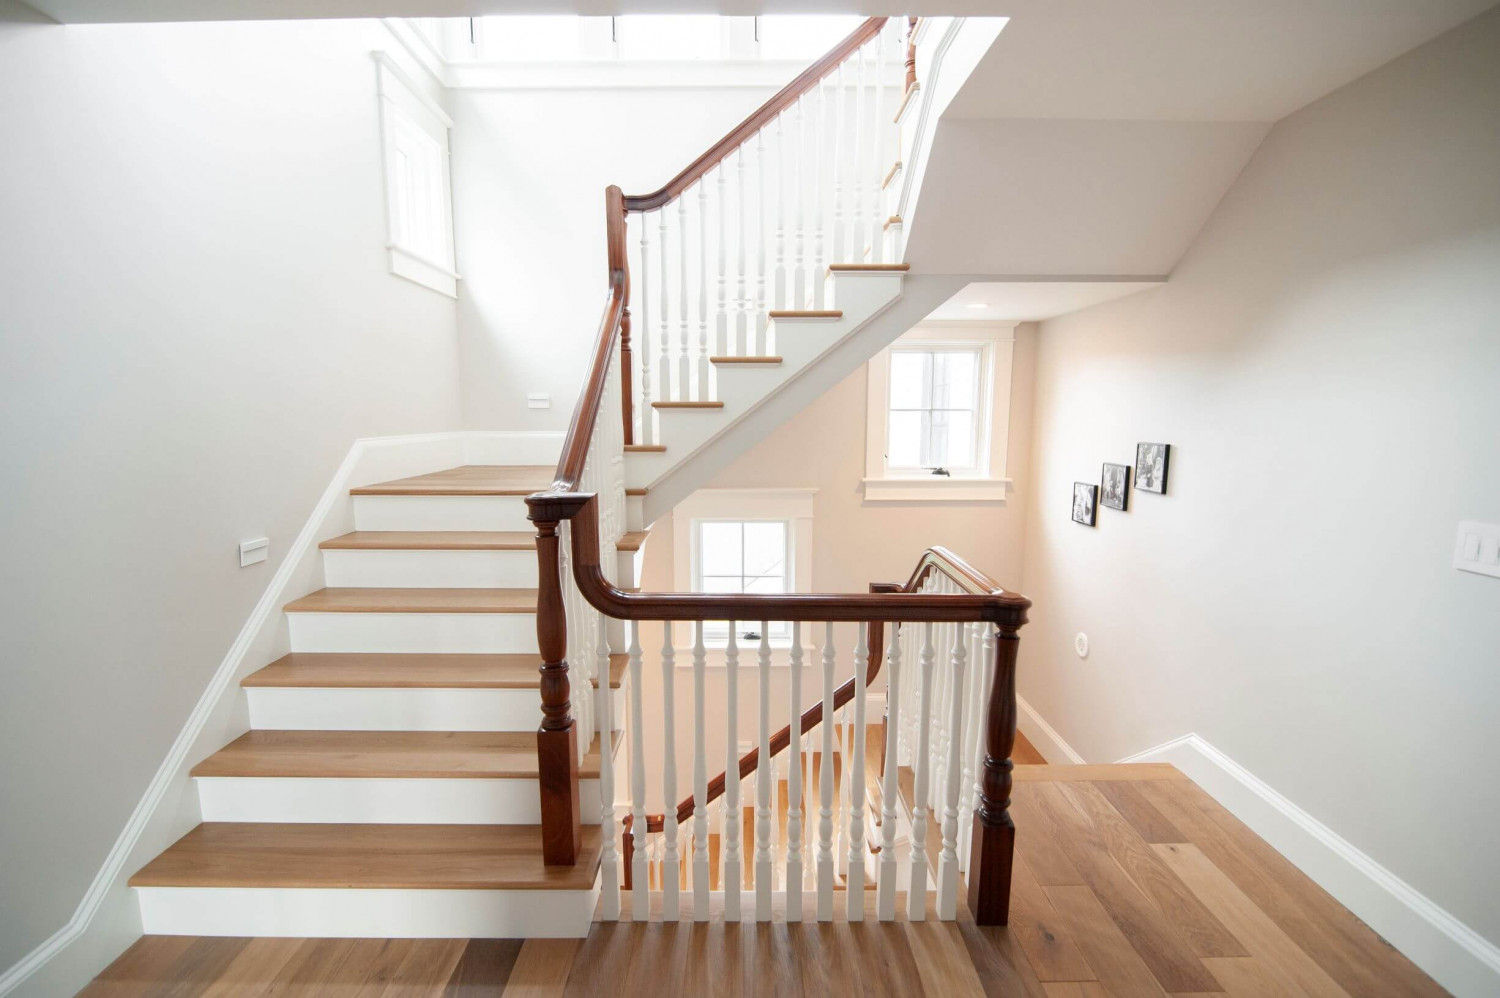 Stair Part Basics – The Steps